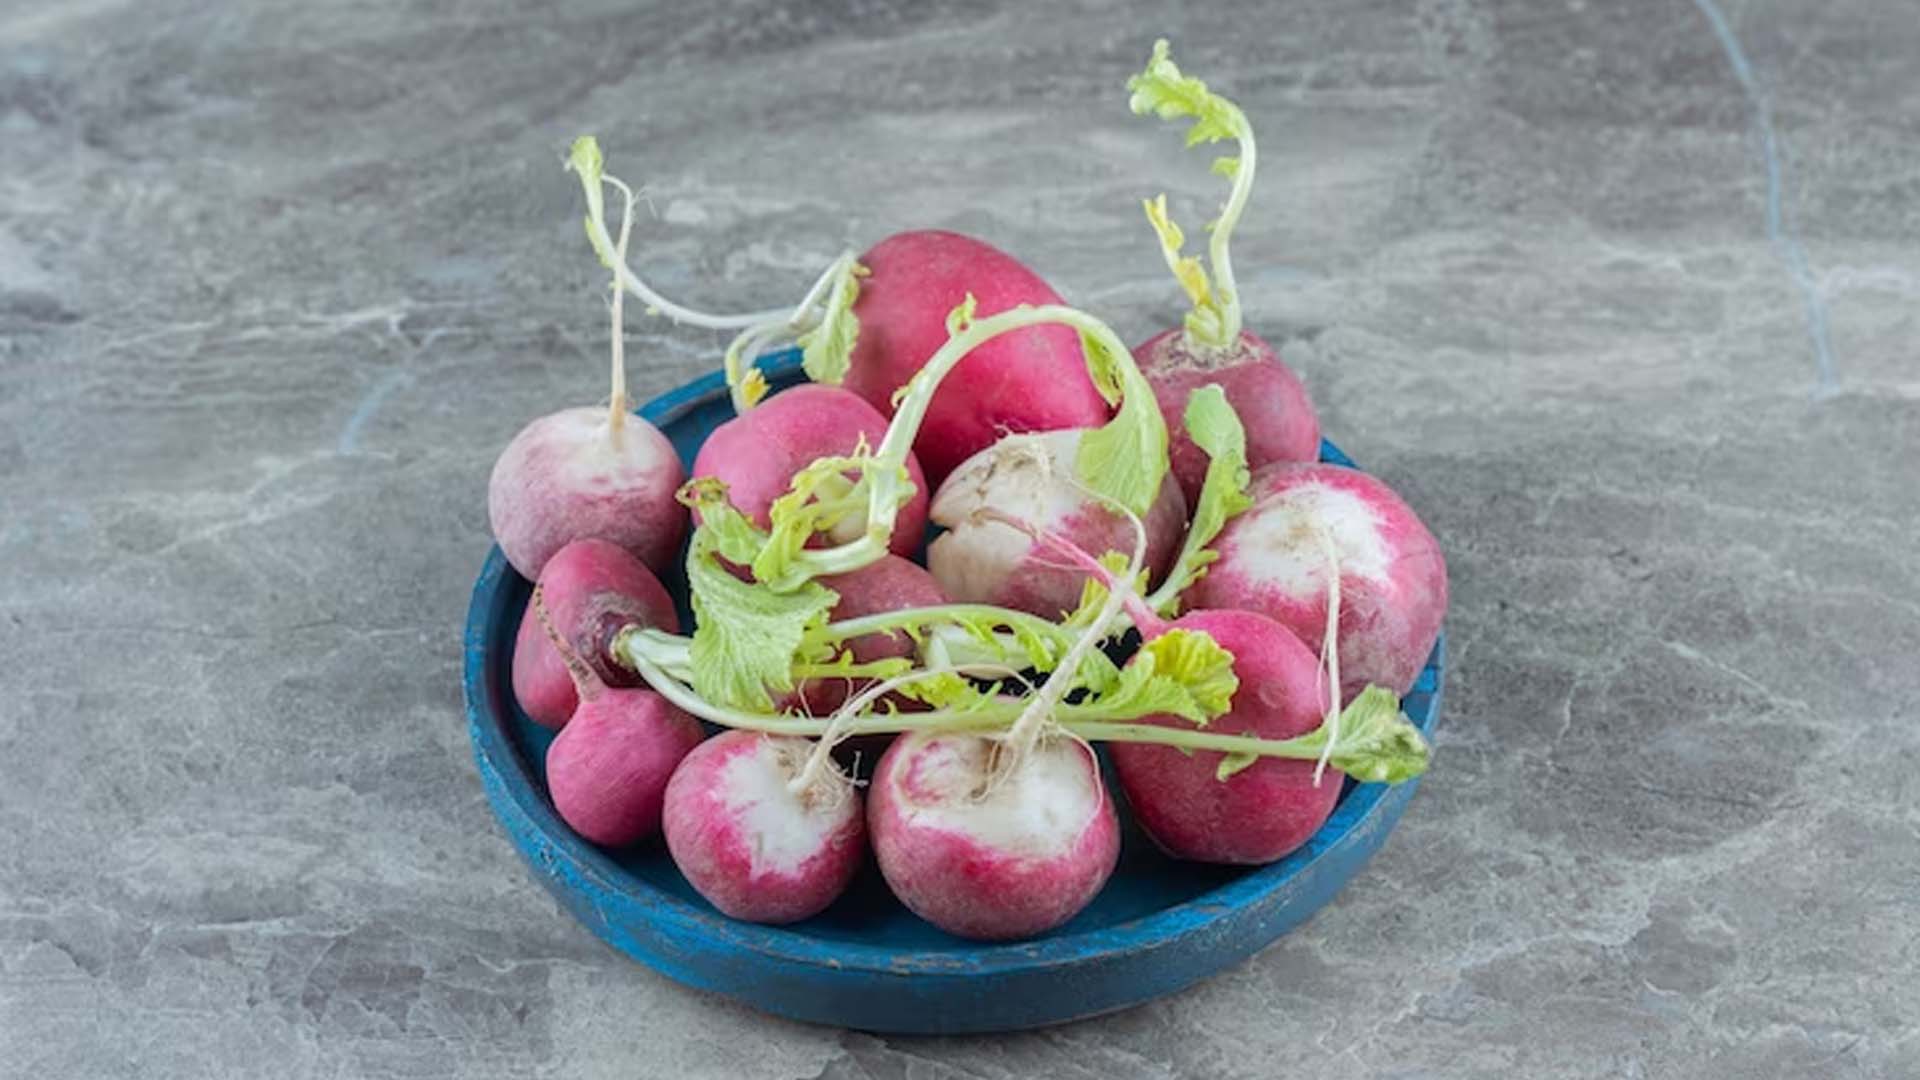 Health Benefits of Eating Turnips